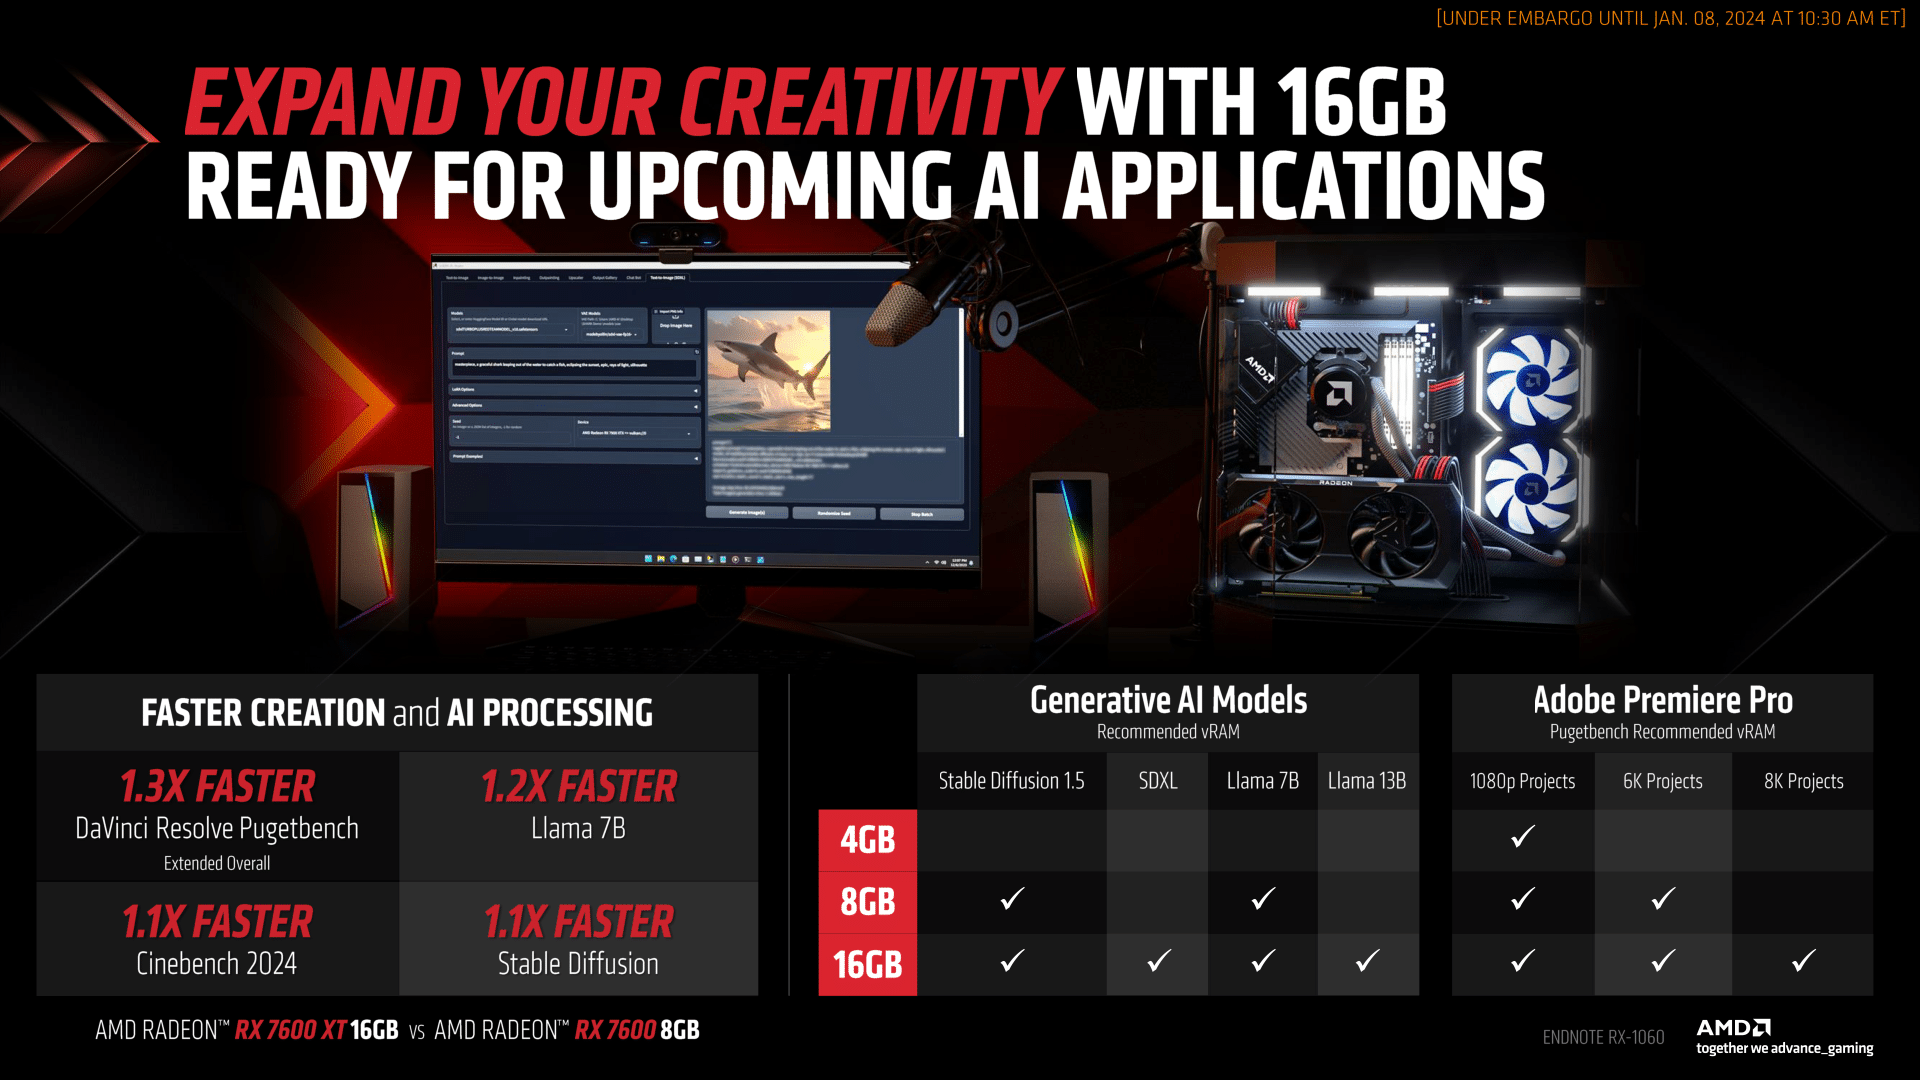 AMD تكشف رسميًا عن بطاقة RX 7600 XT بحجم ذاكرة يصل إلى 16 جيجابايت